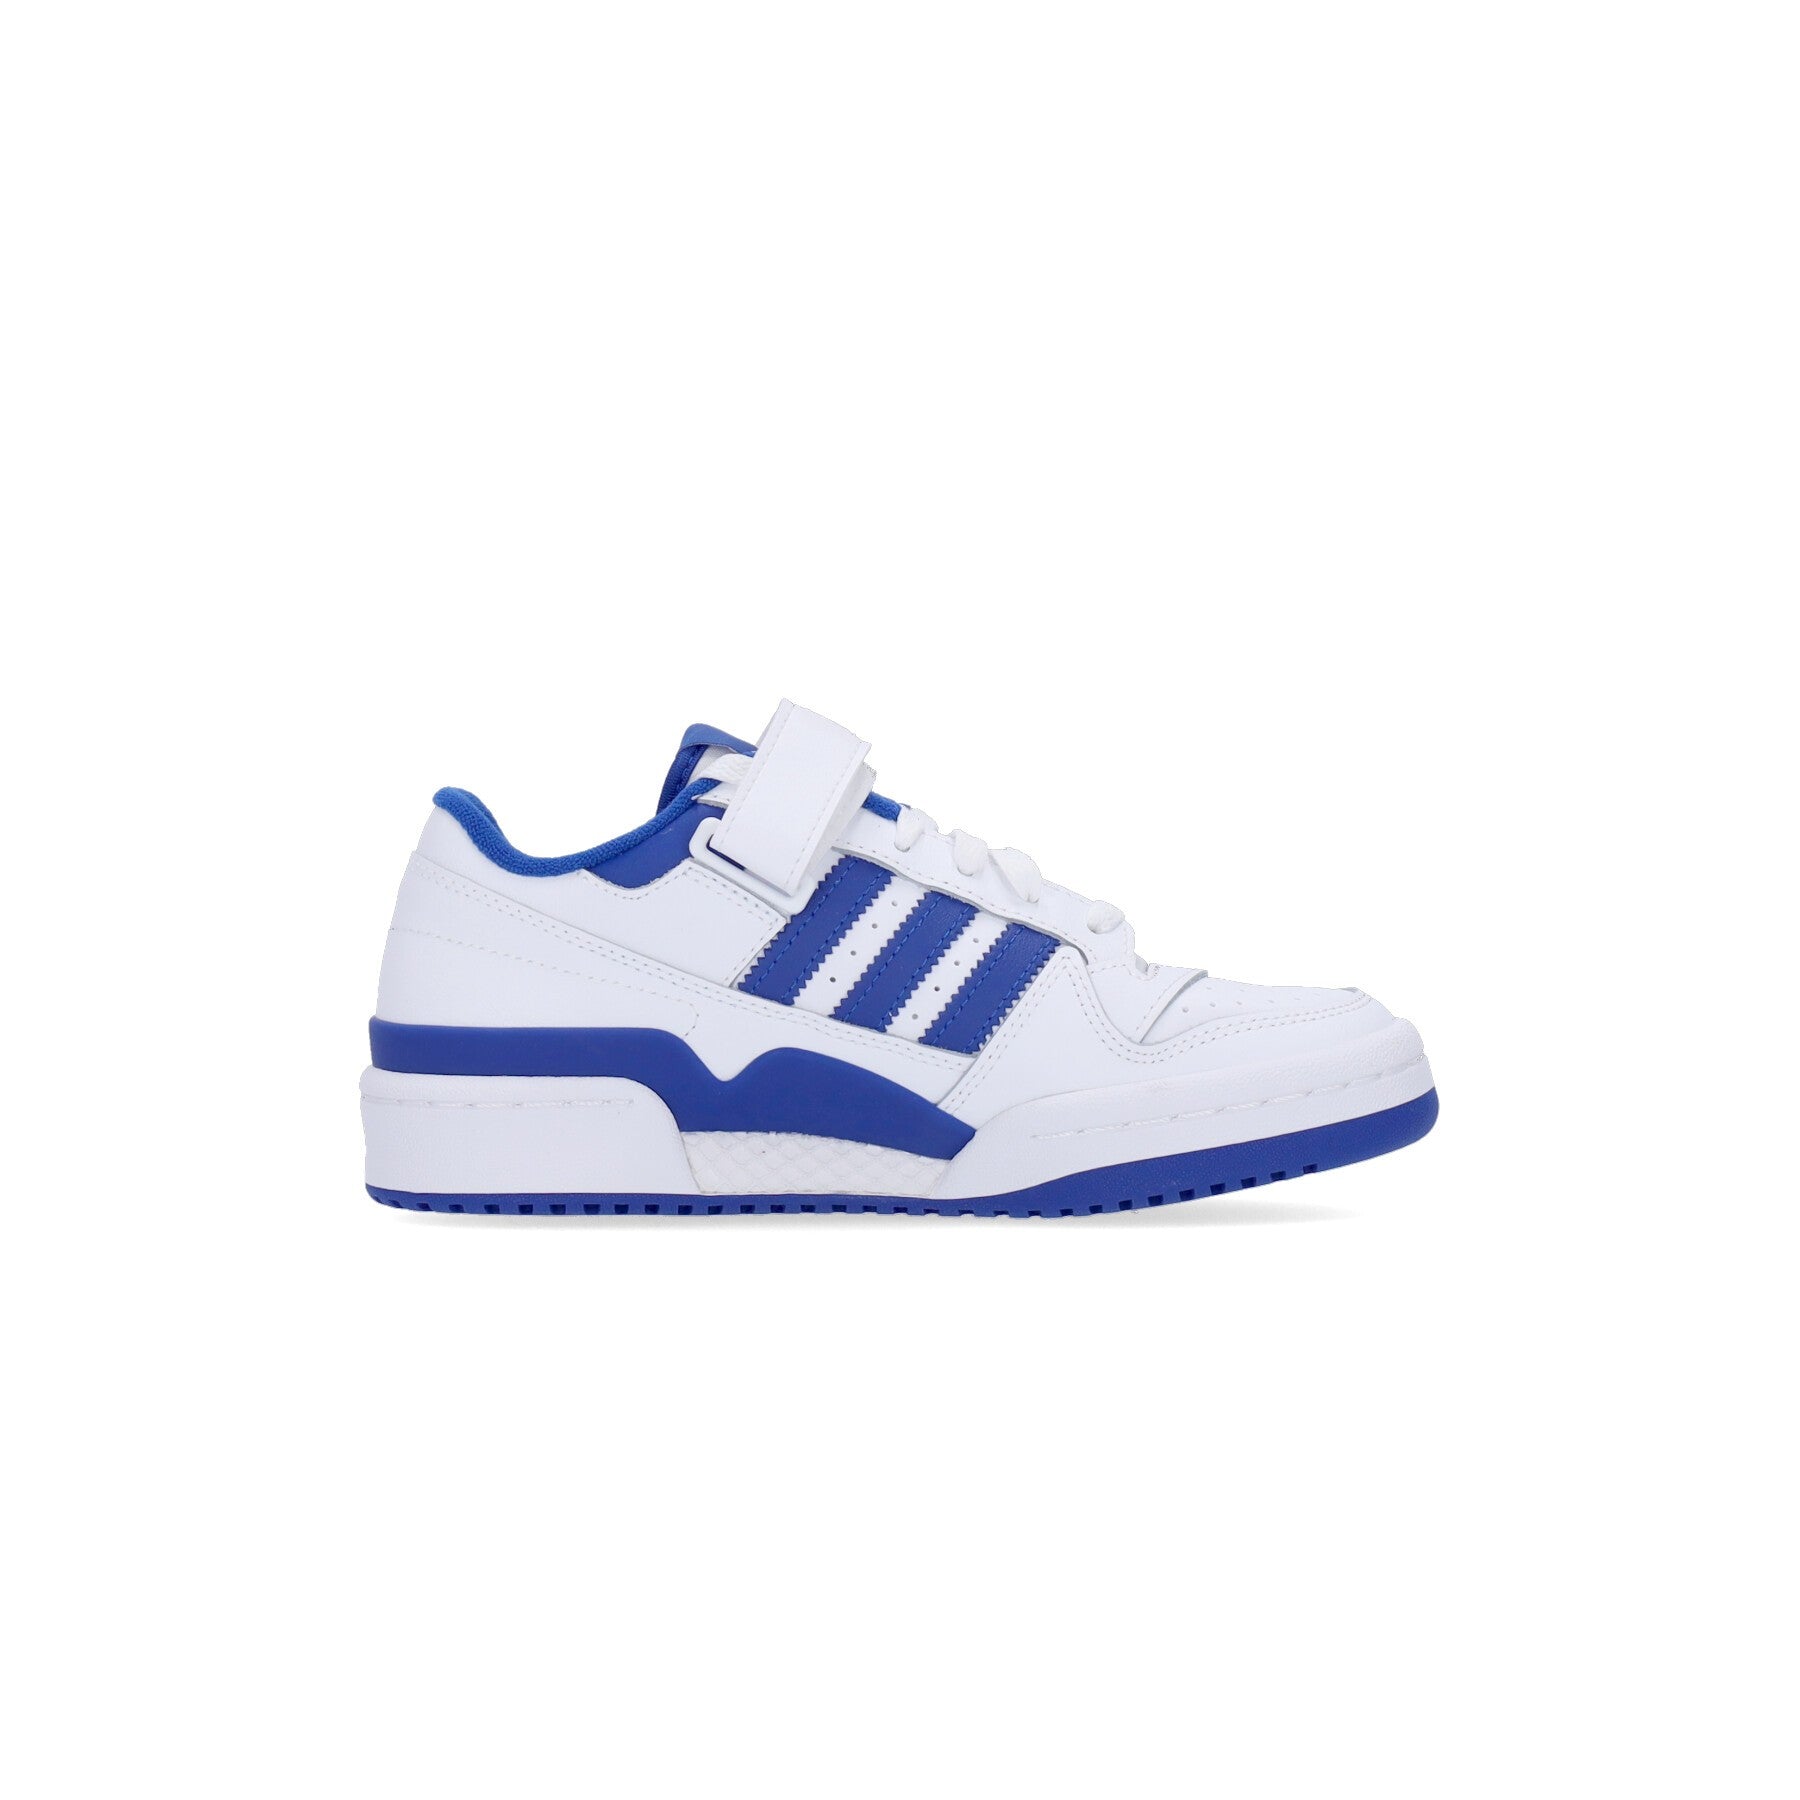 Adidas, Scarpa Bassa Ragazzo Forum Low J, 